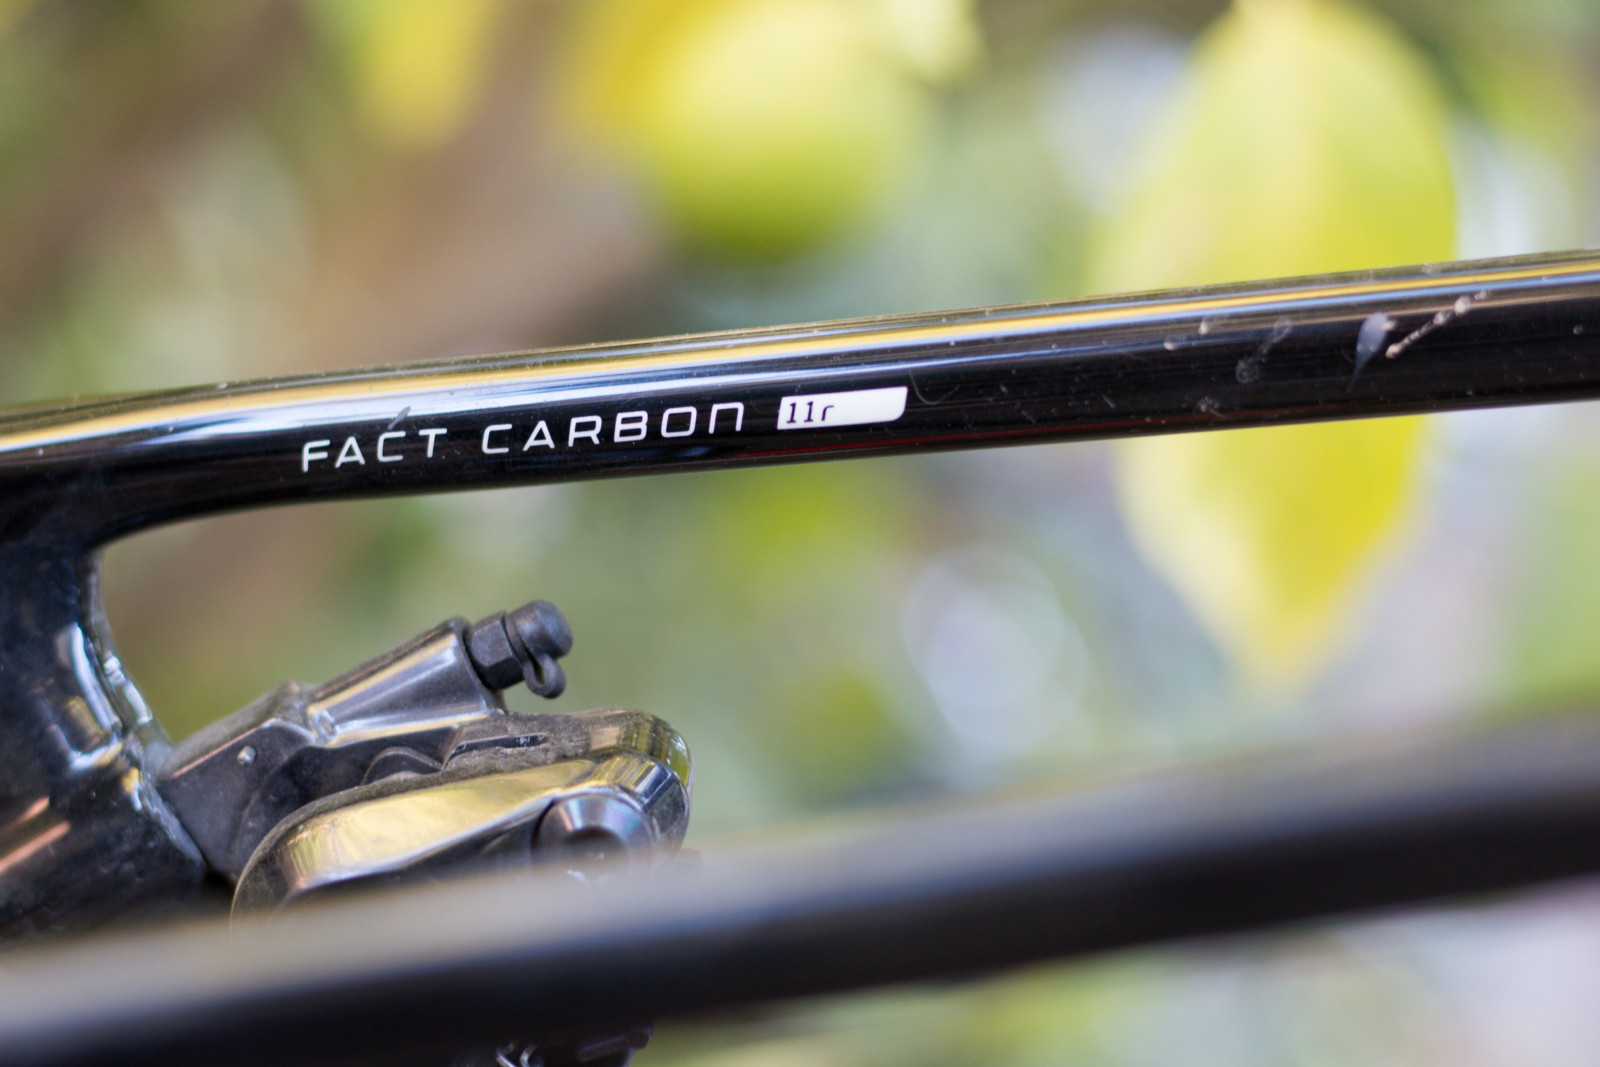 fact 11r carbon